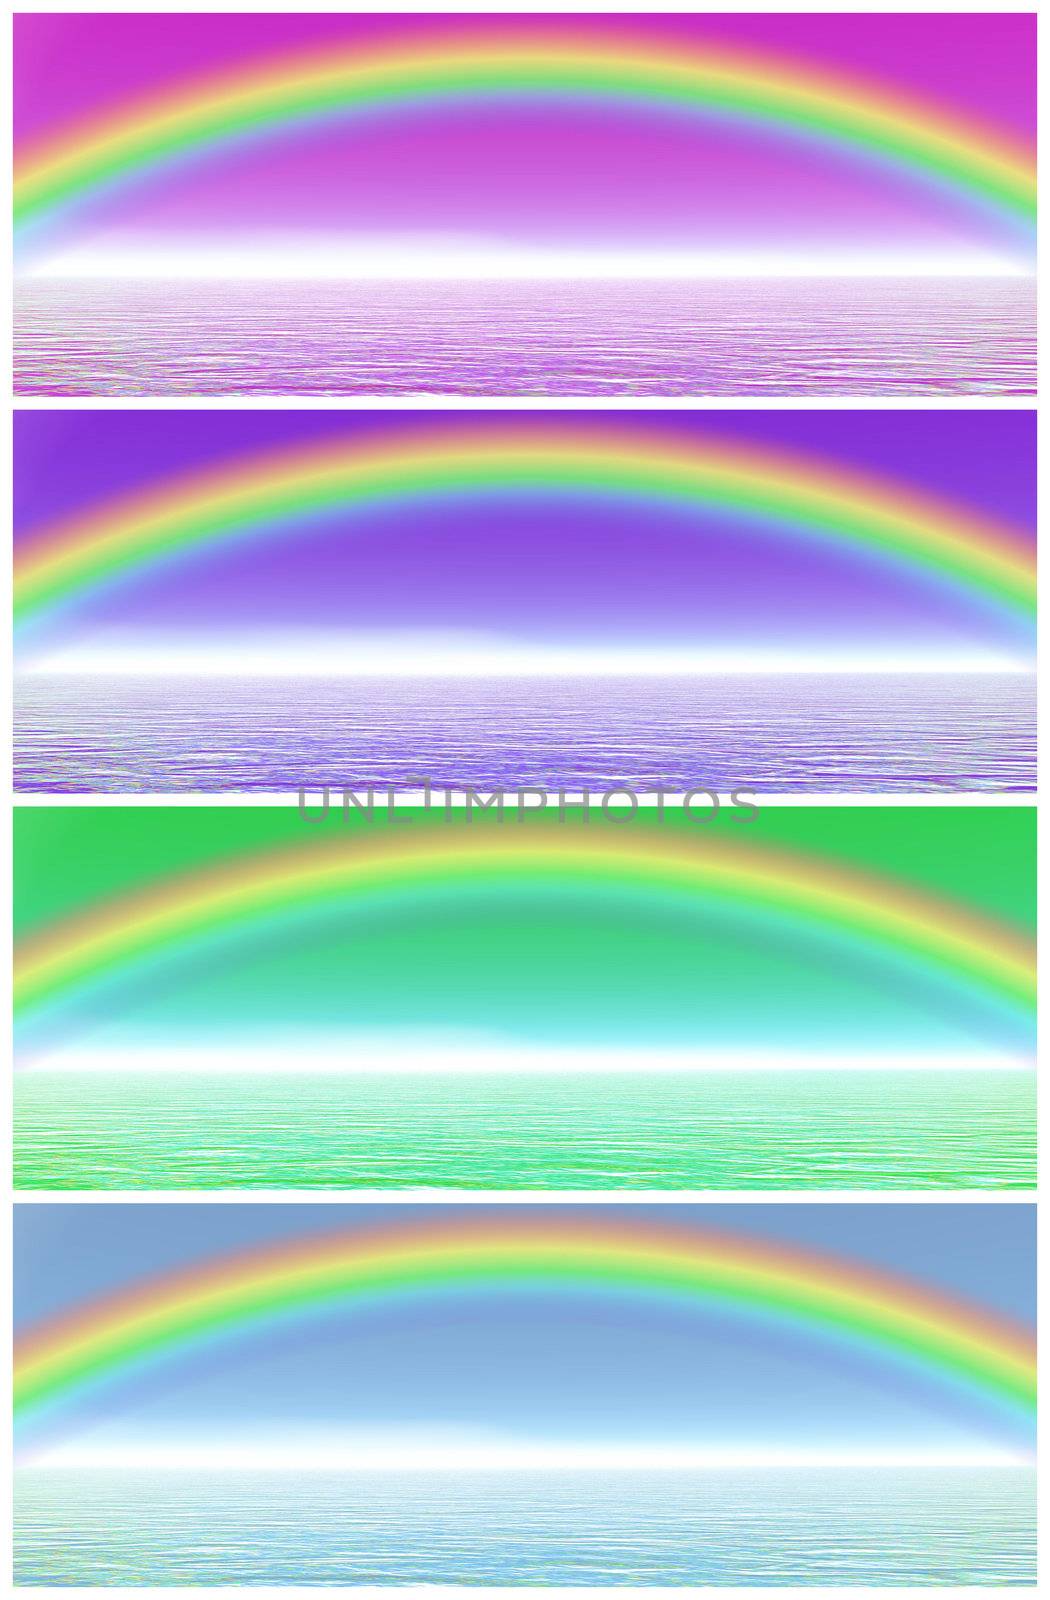 Rainbow set by Elenaphotos21